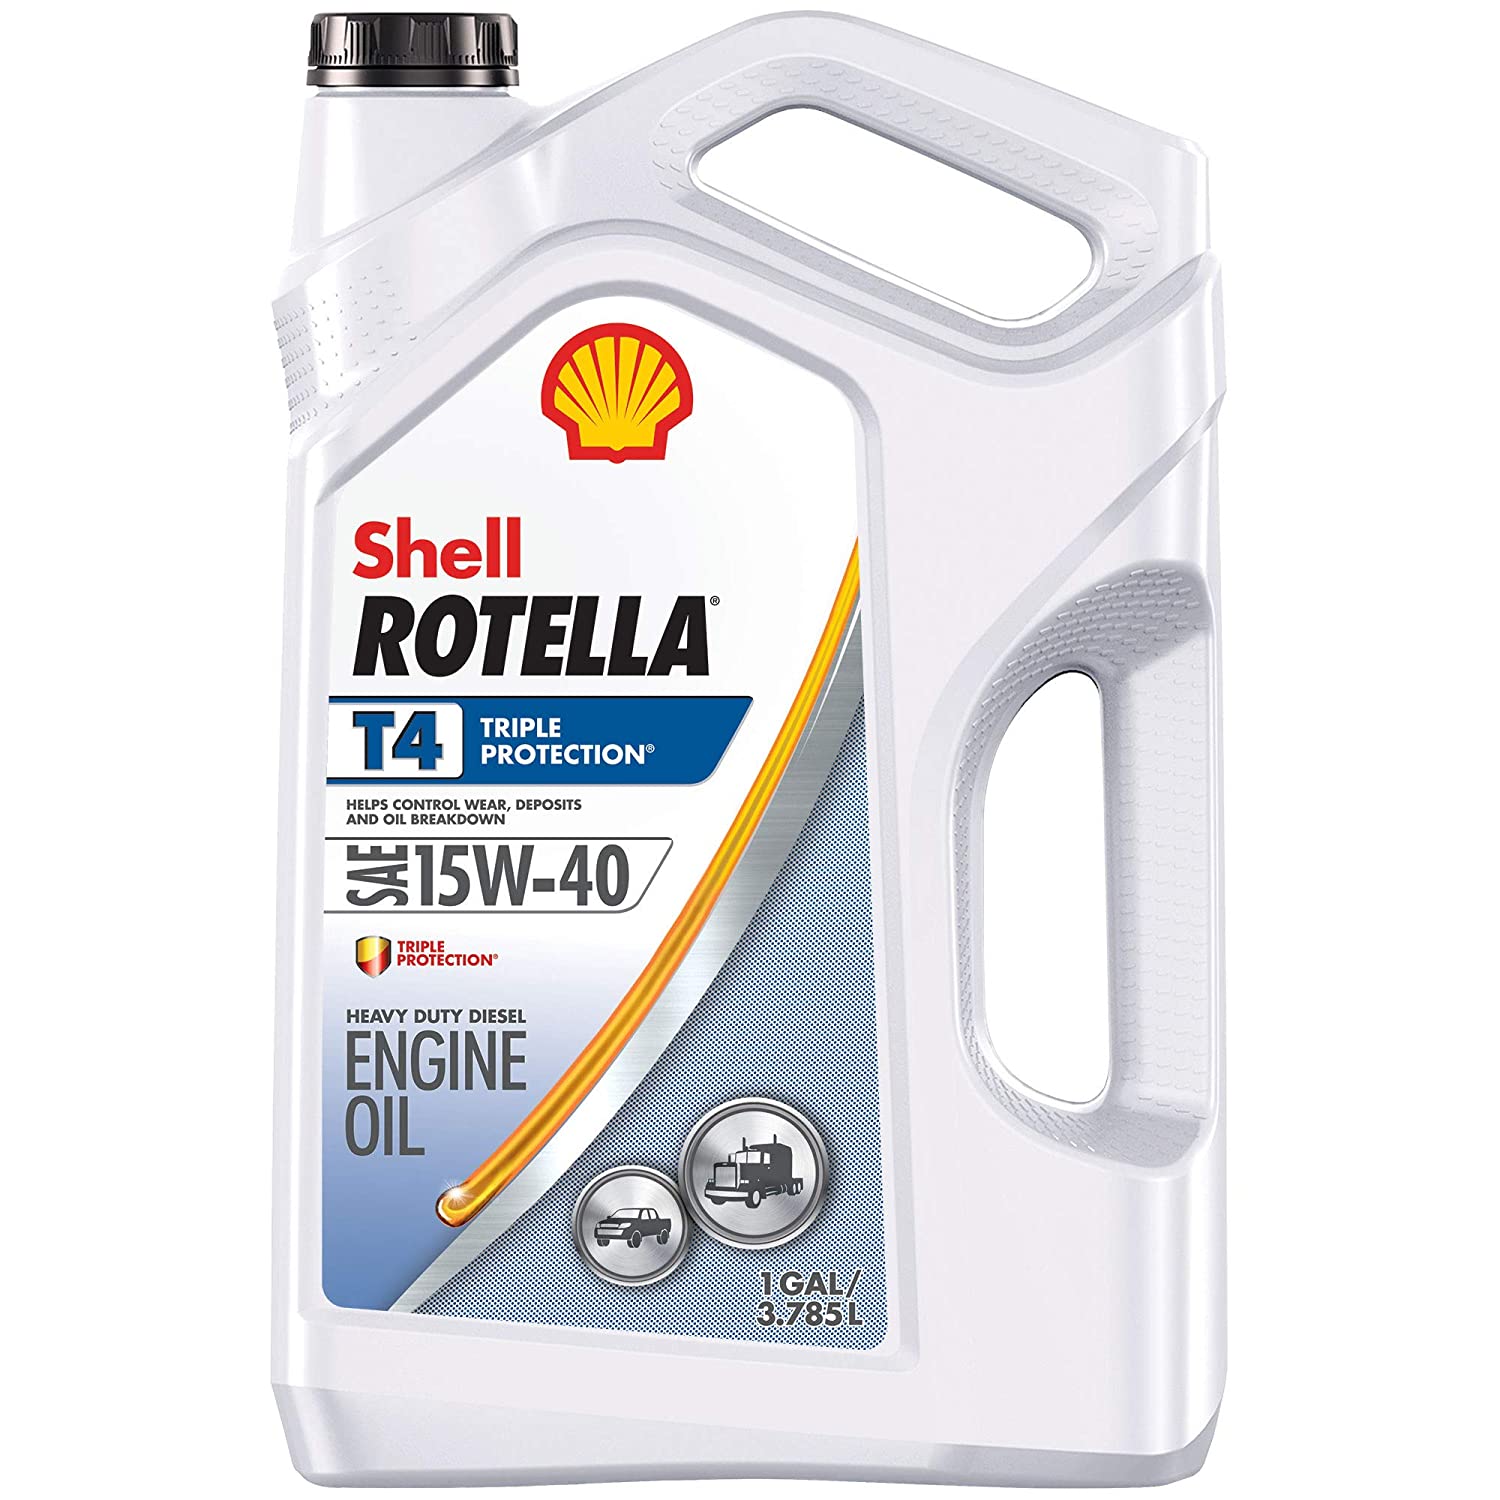 Shell Rotella T4 Triple Protection SAE 15W40 - Gallon (ROTLT41540GL)